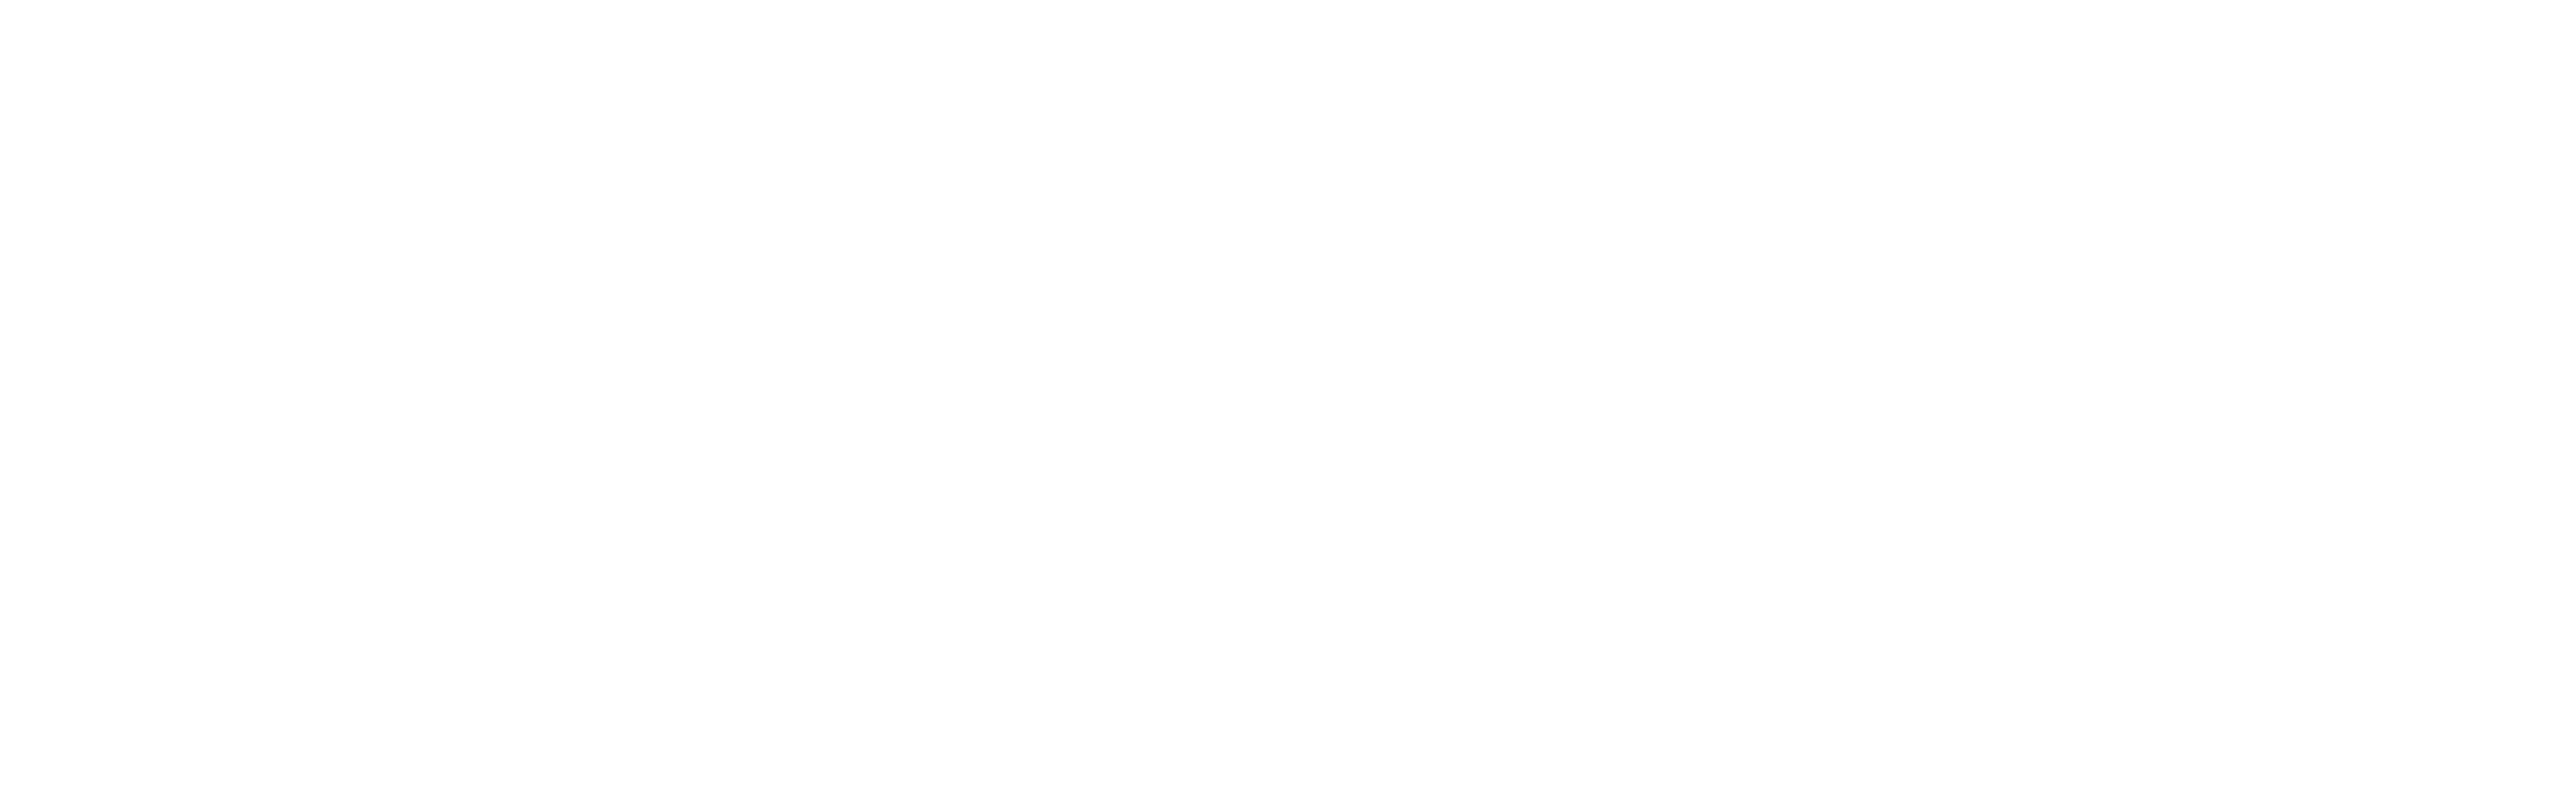 trello logo image